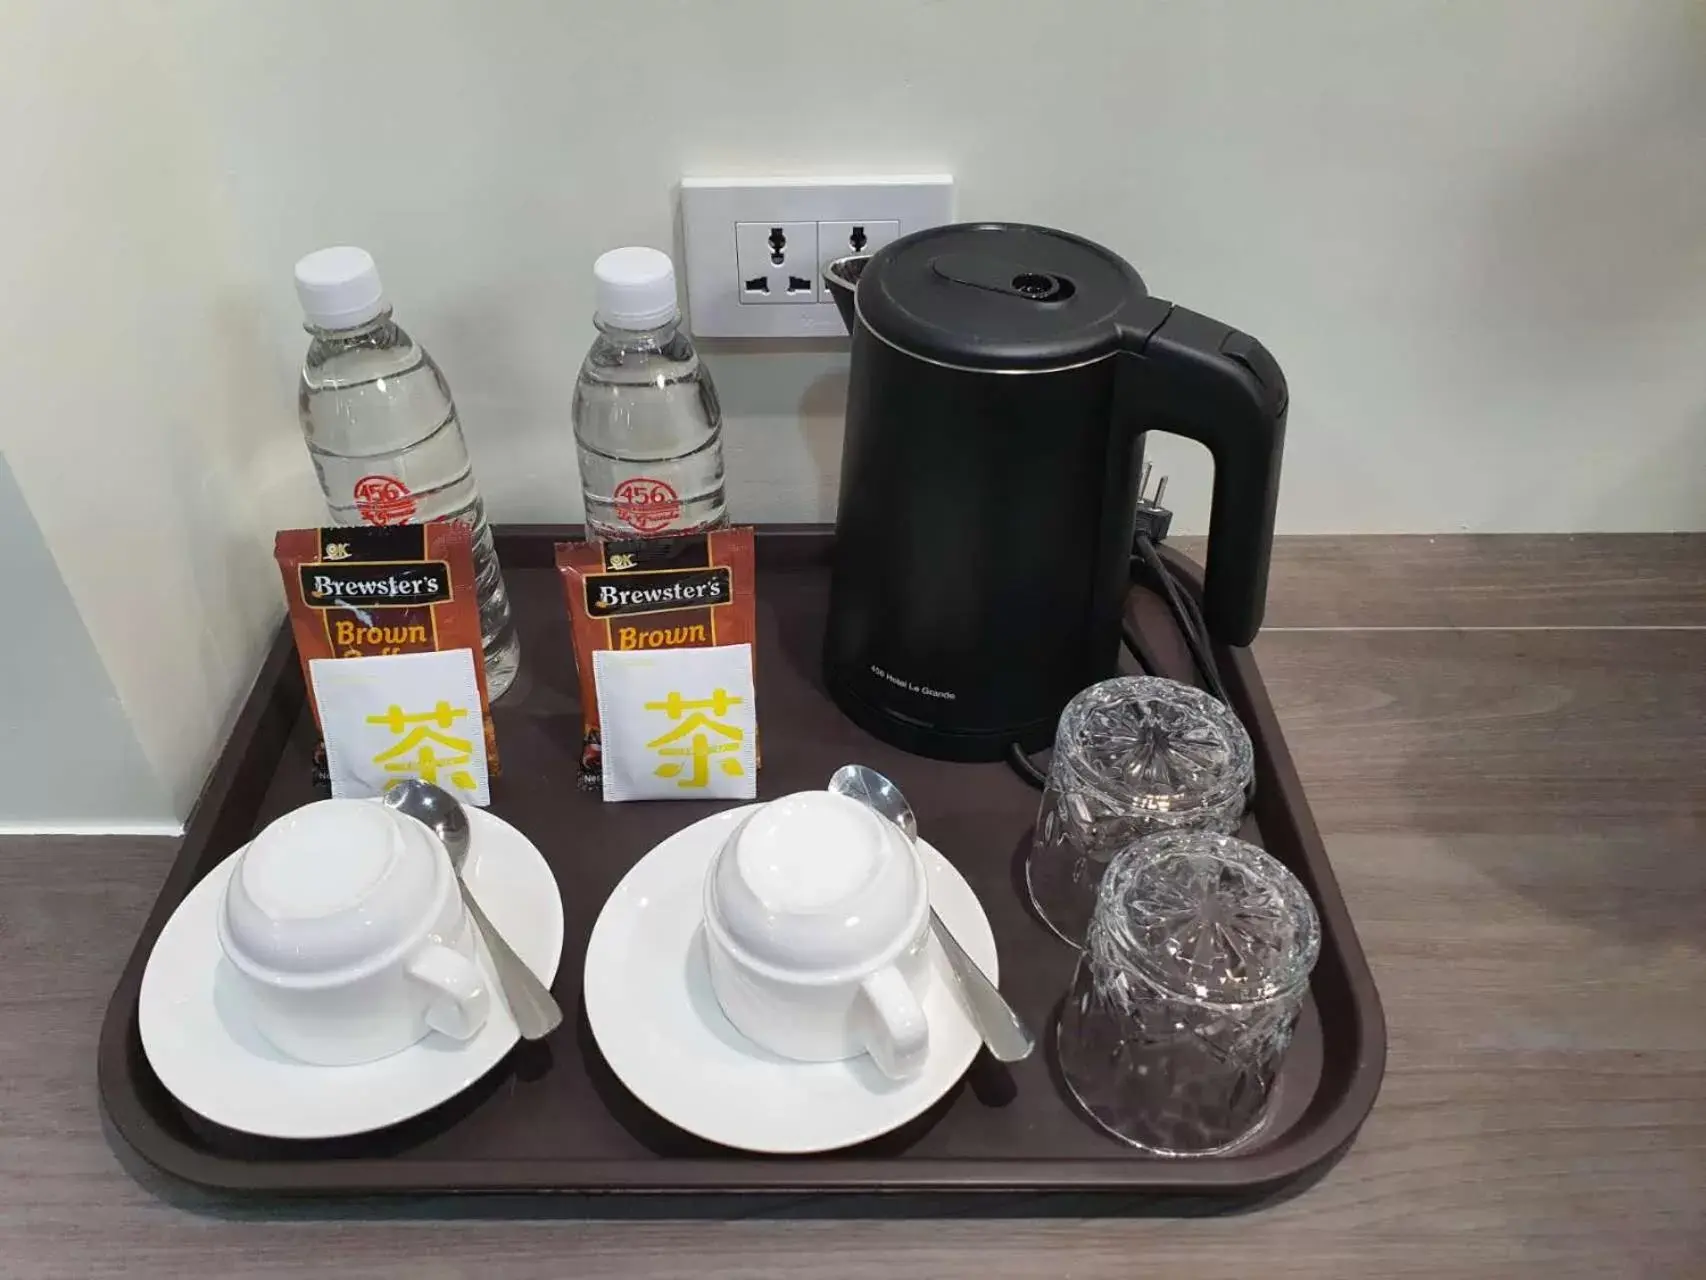 Coffee/tea facilities in 456 Hotel